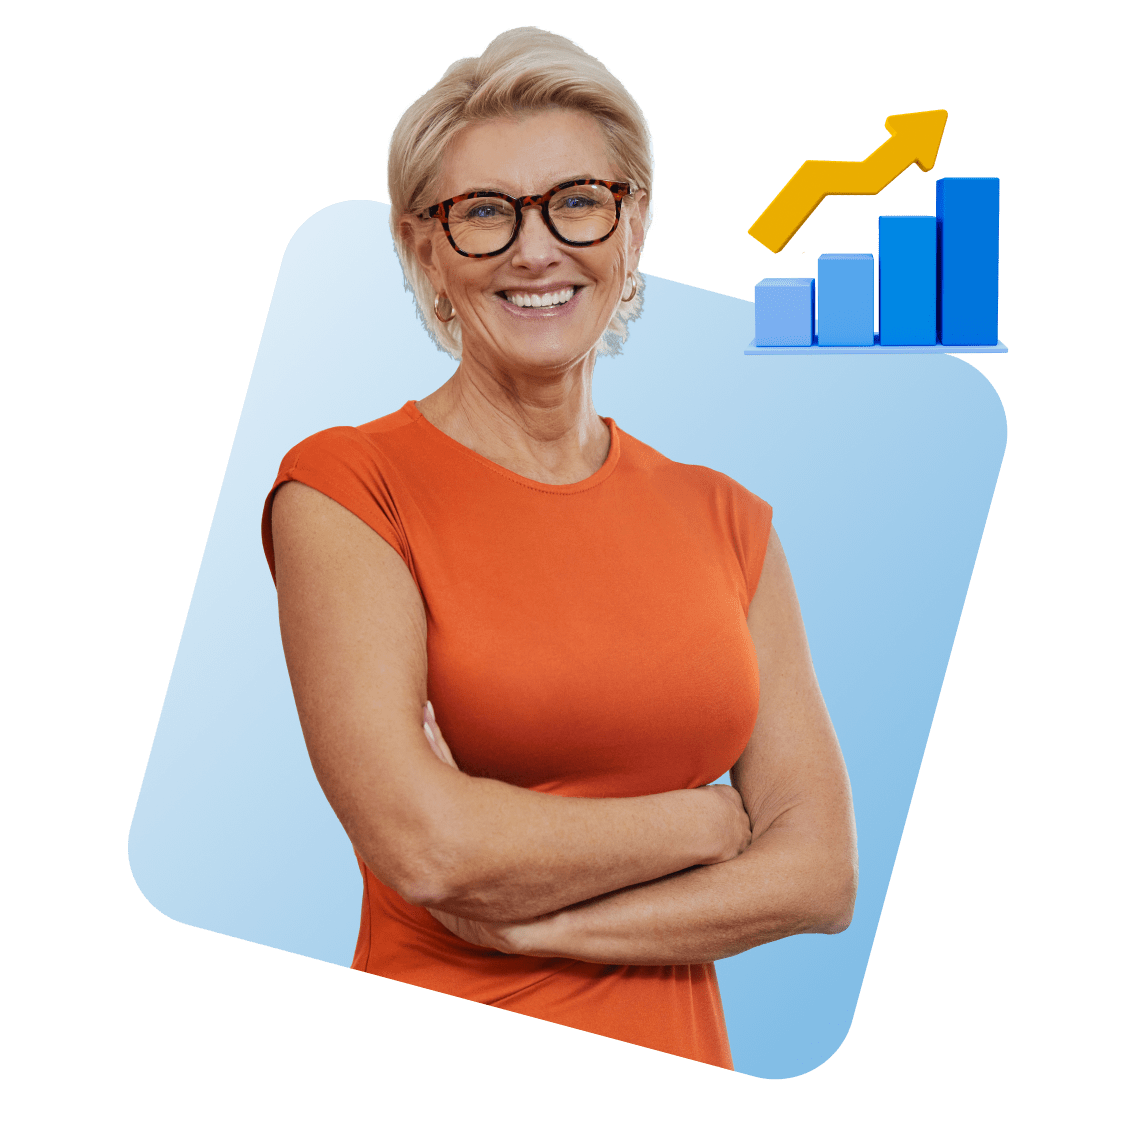 Business Management and Administration image 1 (name 4 Adult Women Glasses Orange Shirt BarGraph)